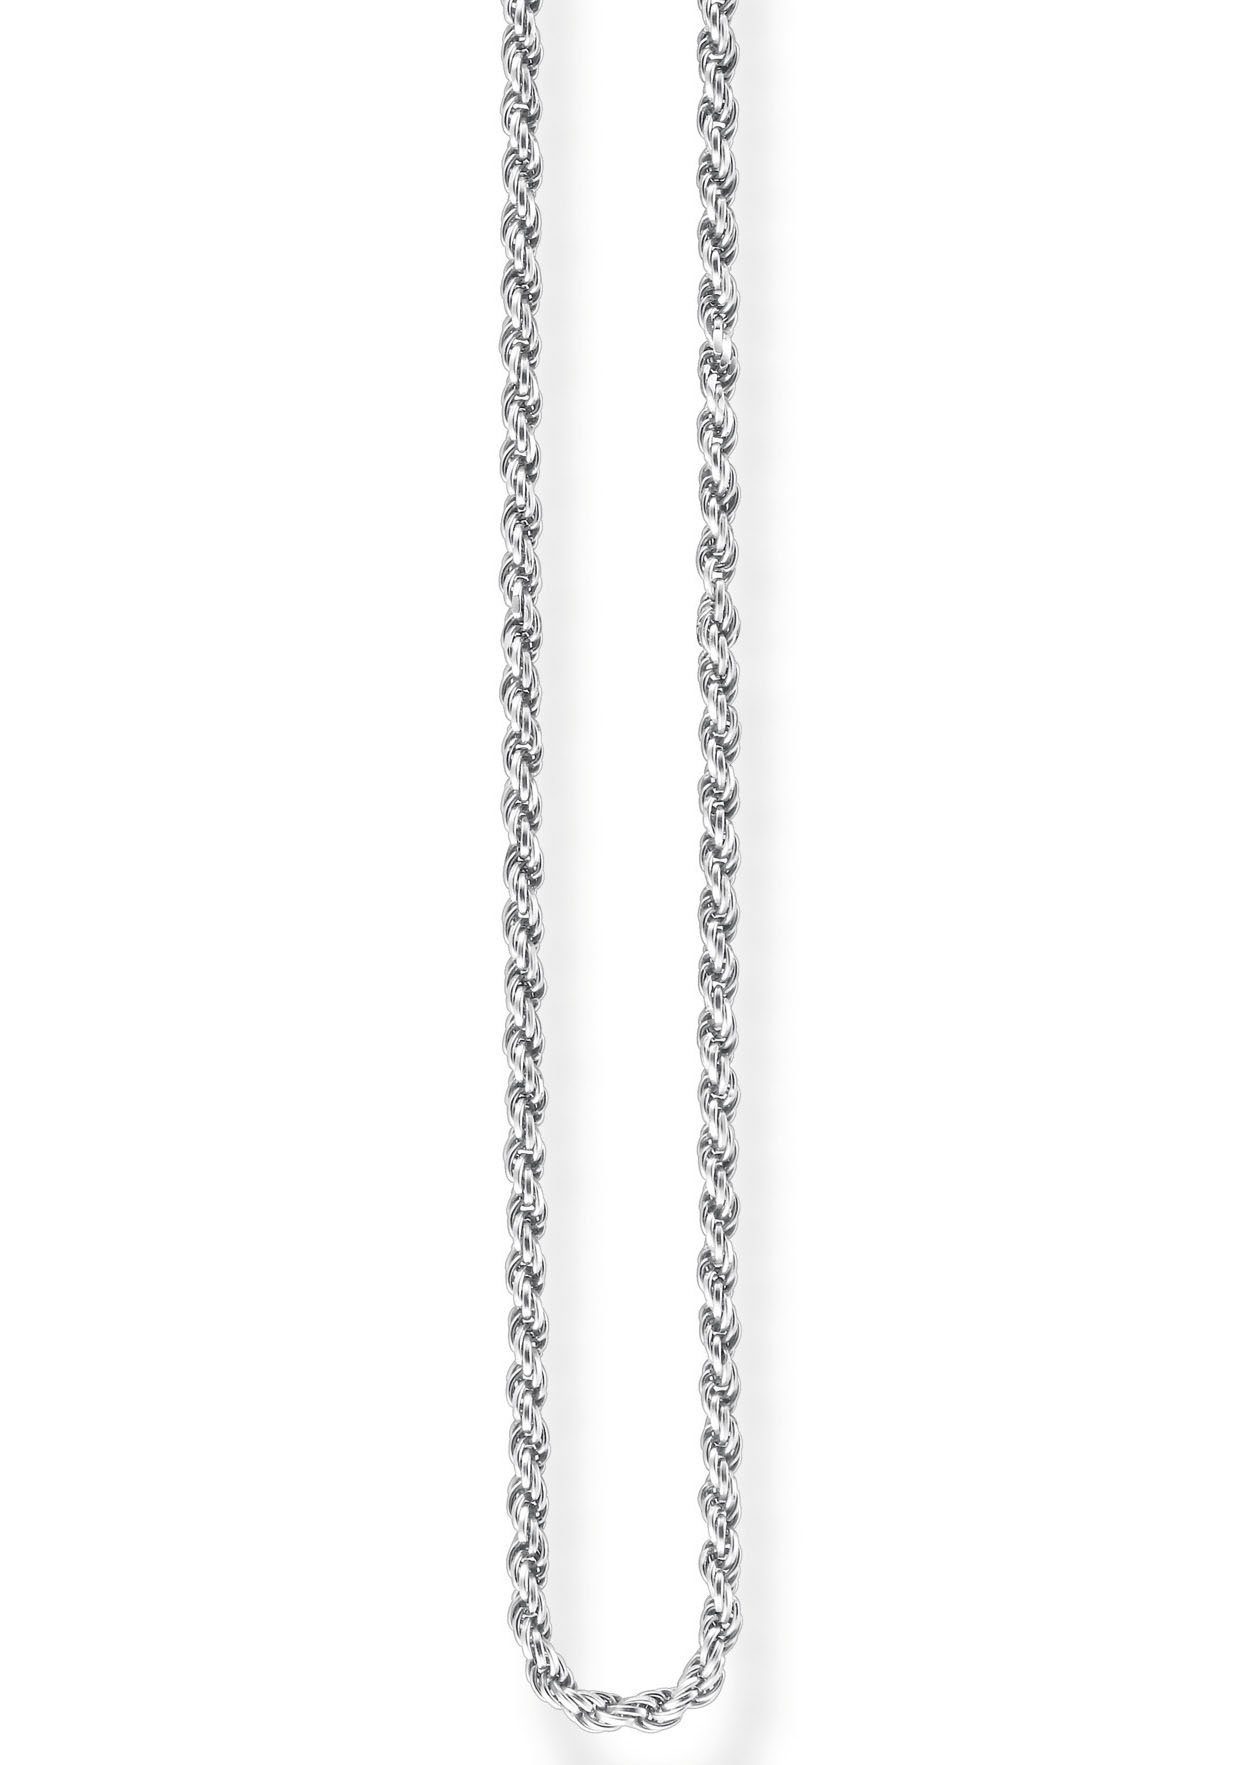 Top-Modell THOMAS SABO Silberkette erhältlich In KE1348-001-12-L50, verschiedenen Längen Kordelkette, KE1348-001-12-L40